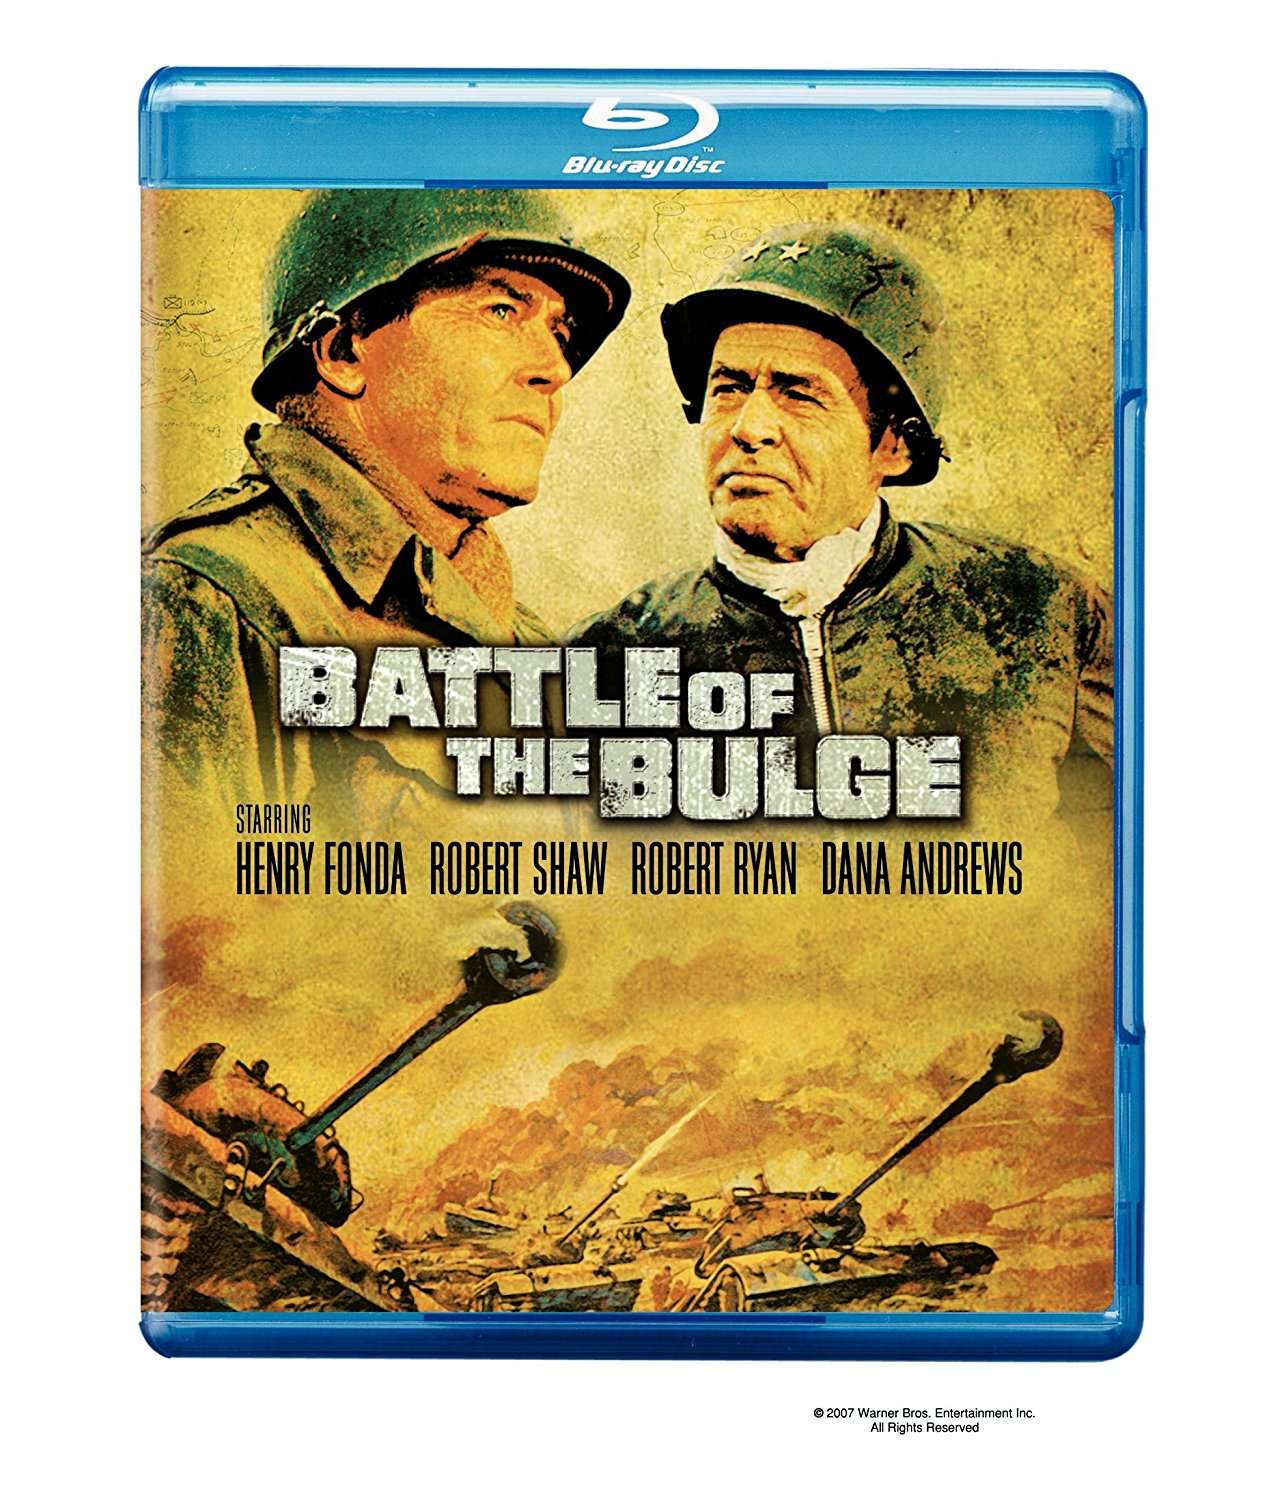 La battaglia dei giganti (1965) FullHD BDRip 1080p Ac3 ITA (DVD Resync) ENG Subs - Krikk